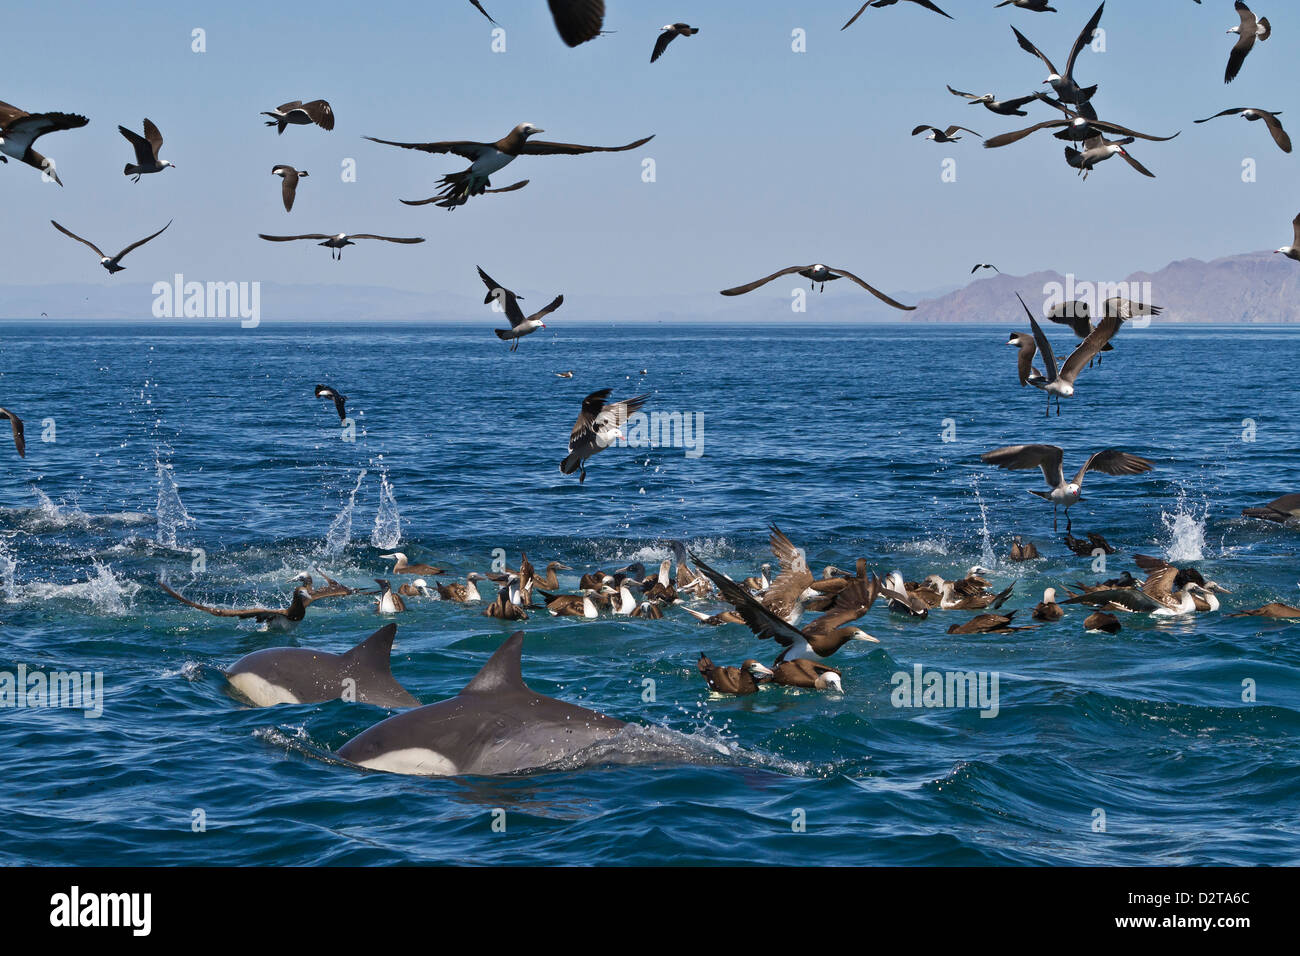 Long-beaked common dolphins feeding, Gulf of California (Sea of Cortez), Baja California, Mexico Stock Photo